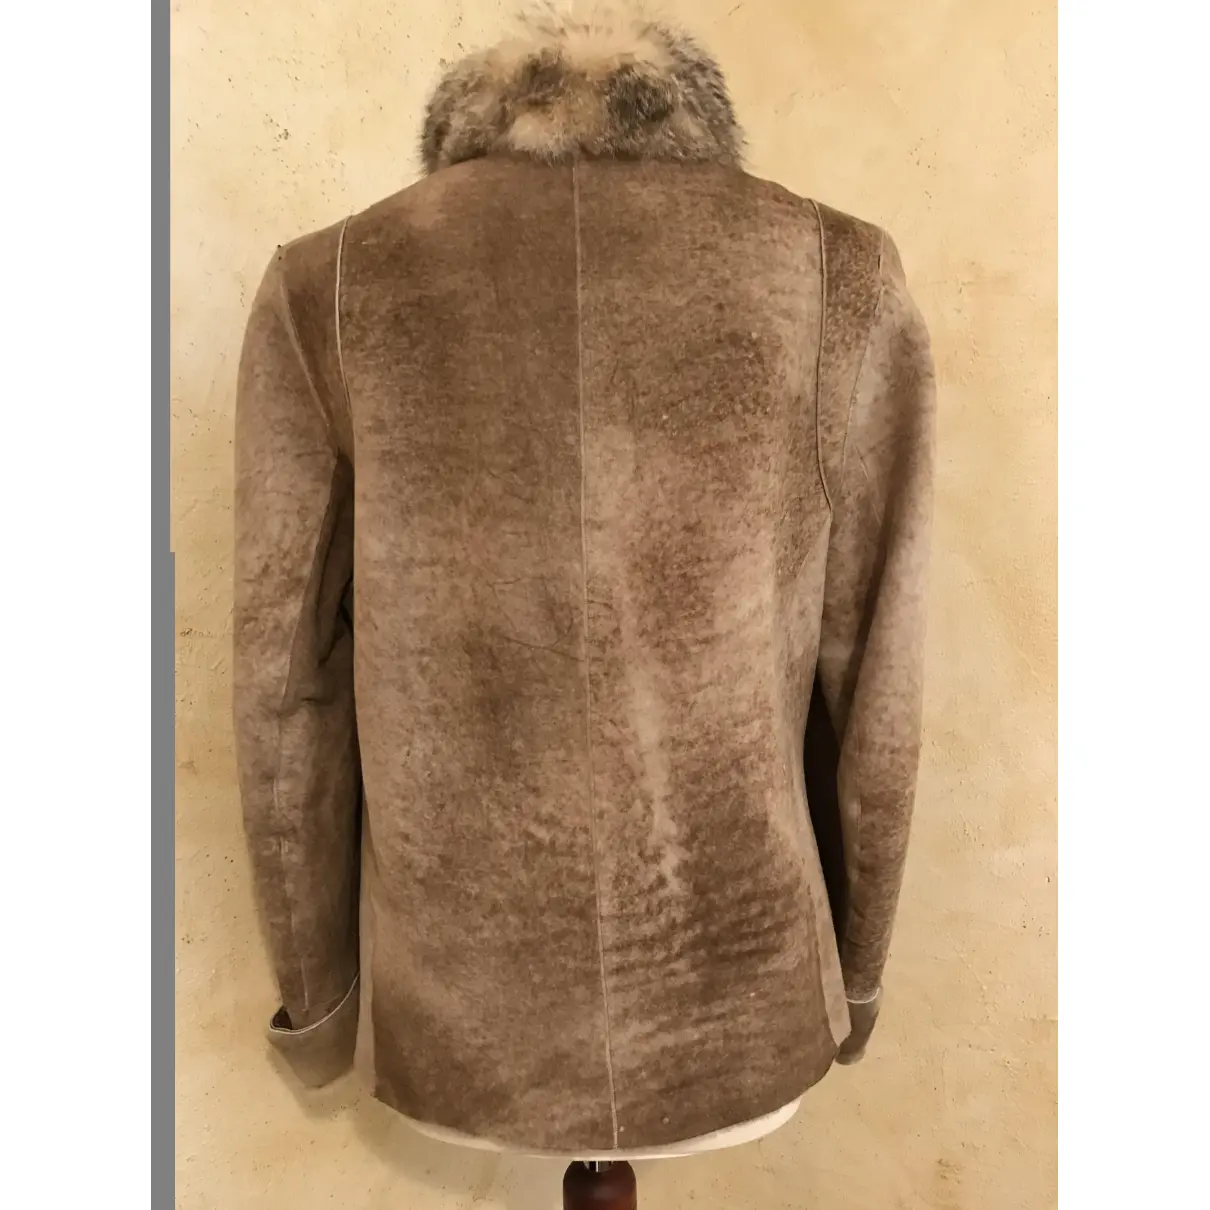 Buy Georges Rech Shearling short vest online